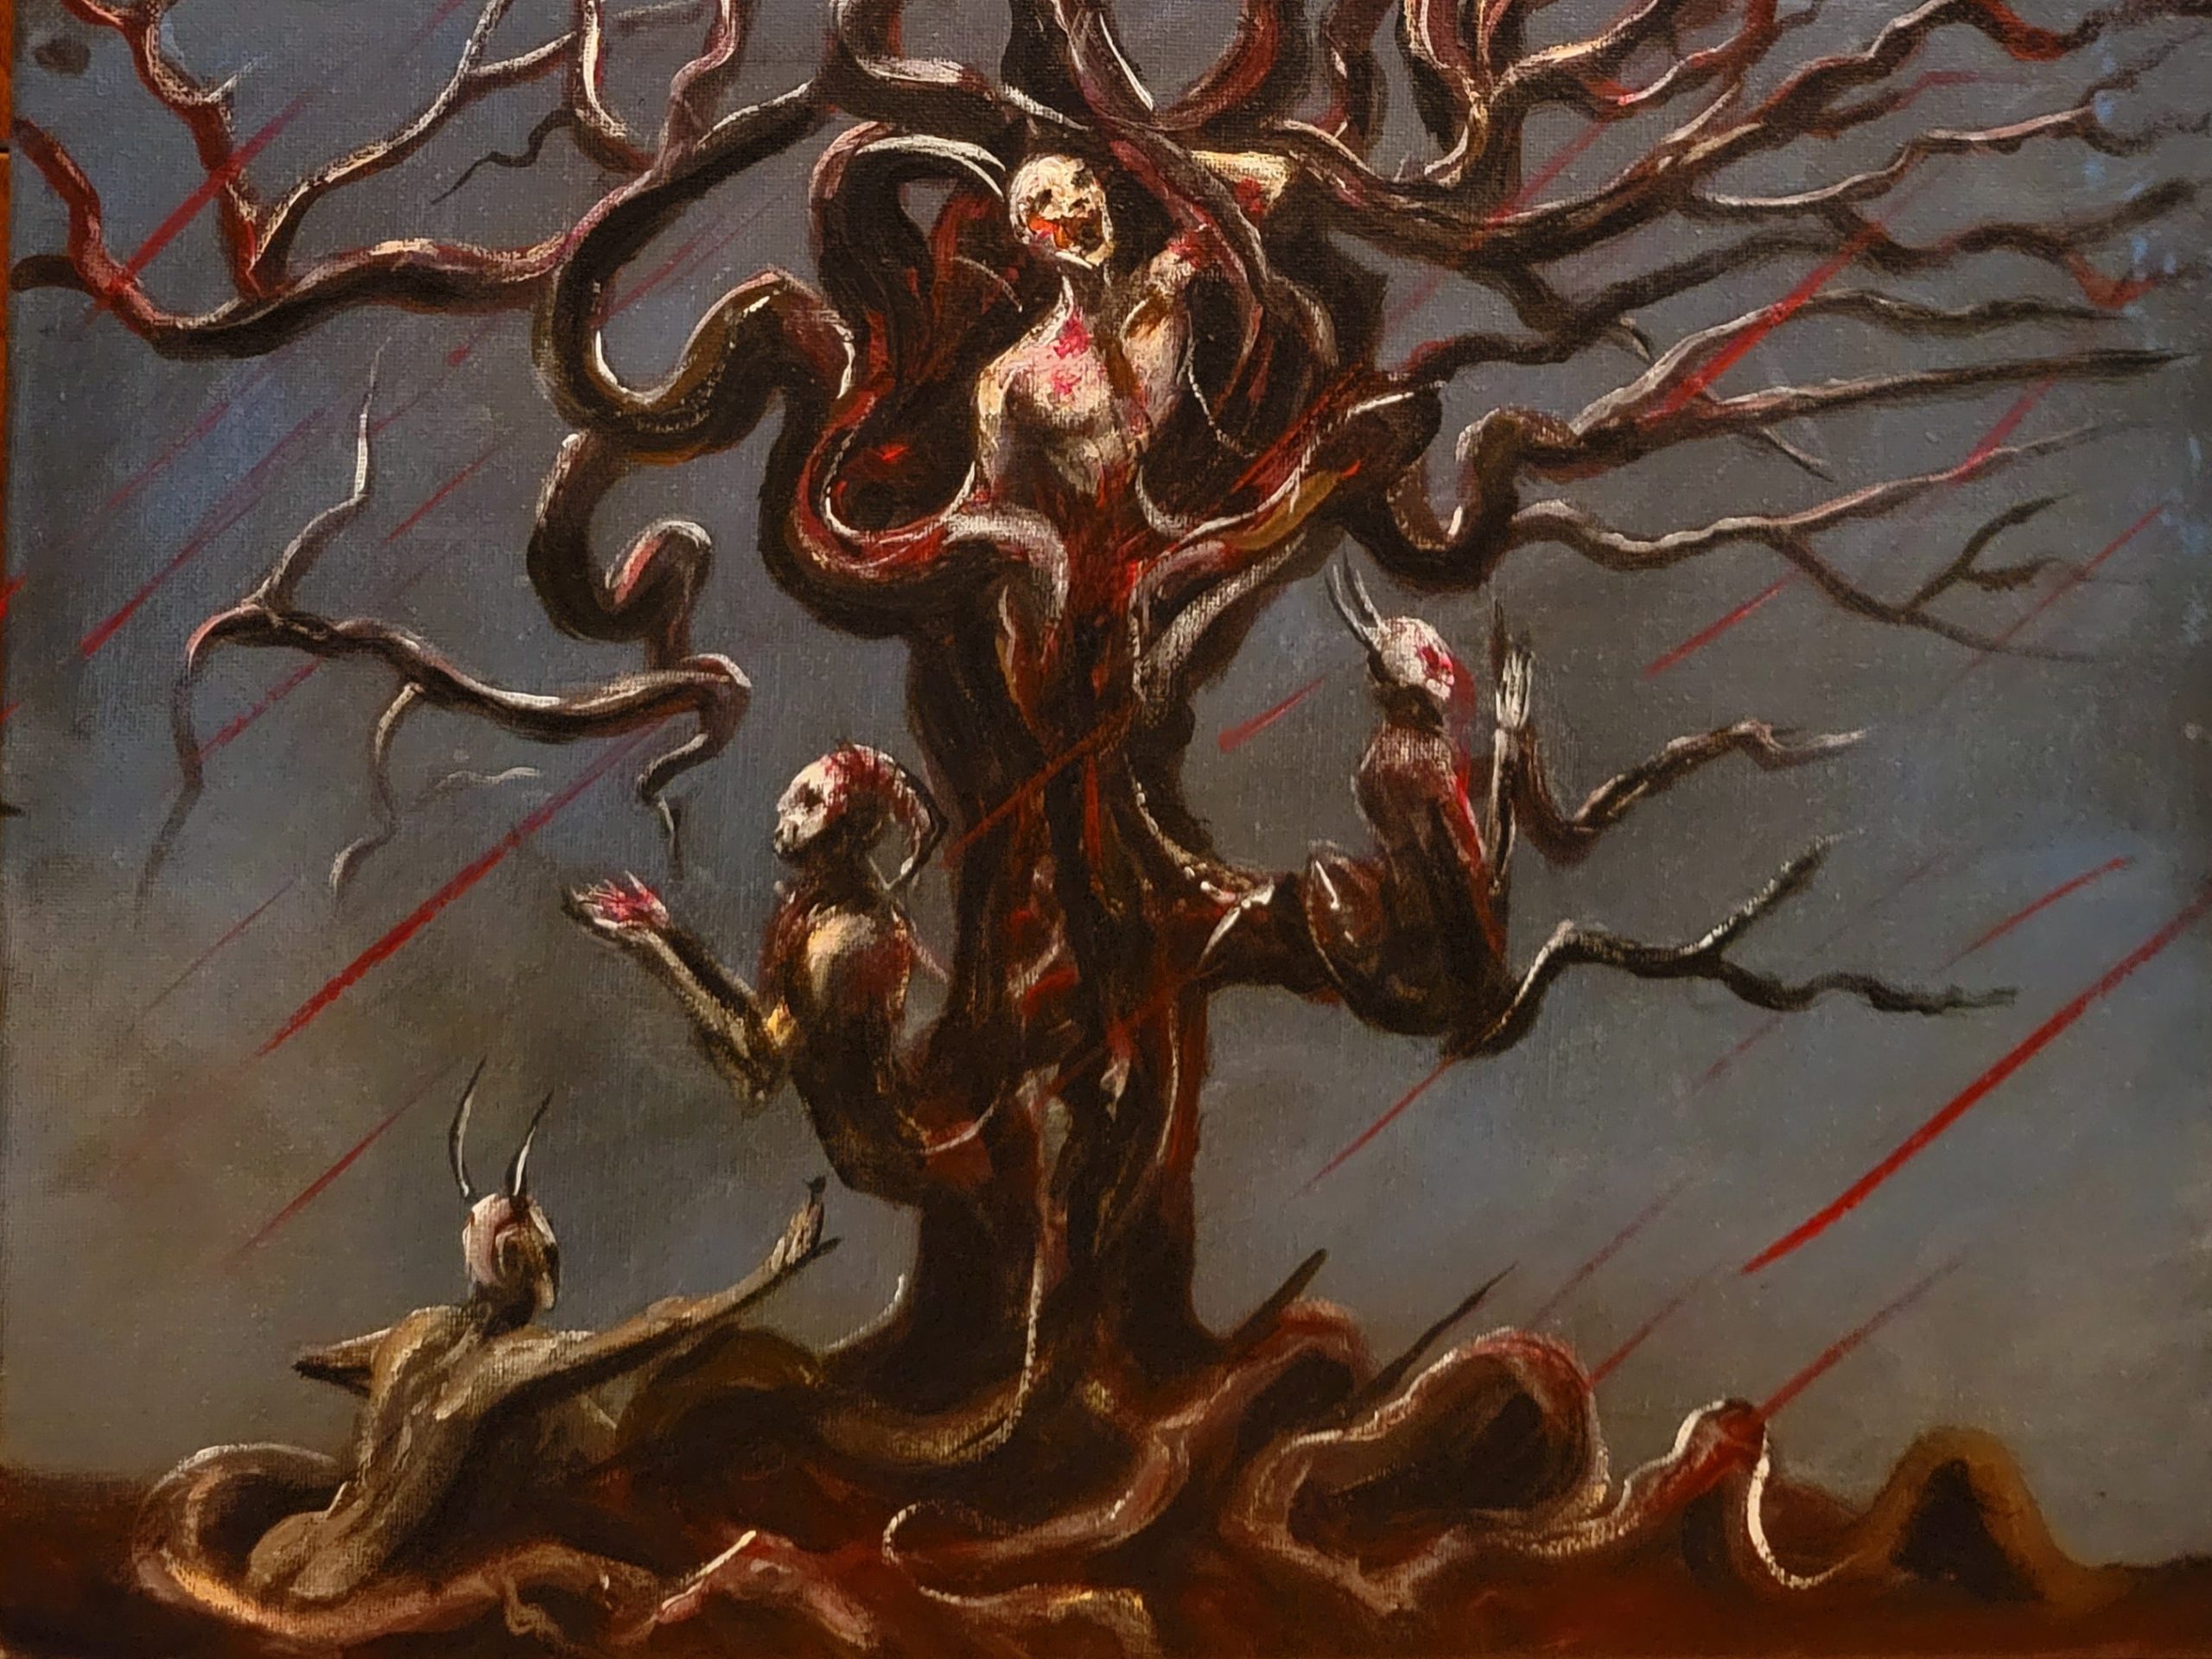 Tree of the Damned by ABeardedArtist on DeviantArt